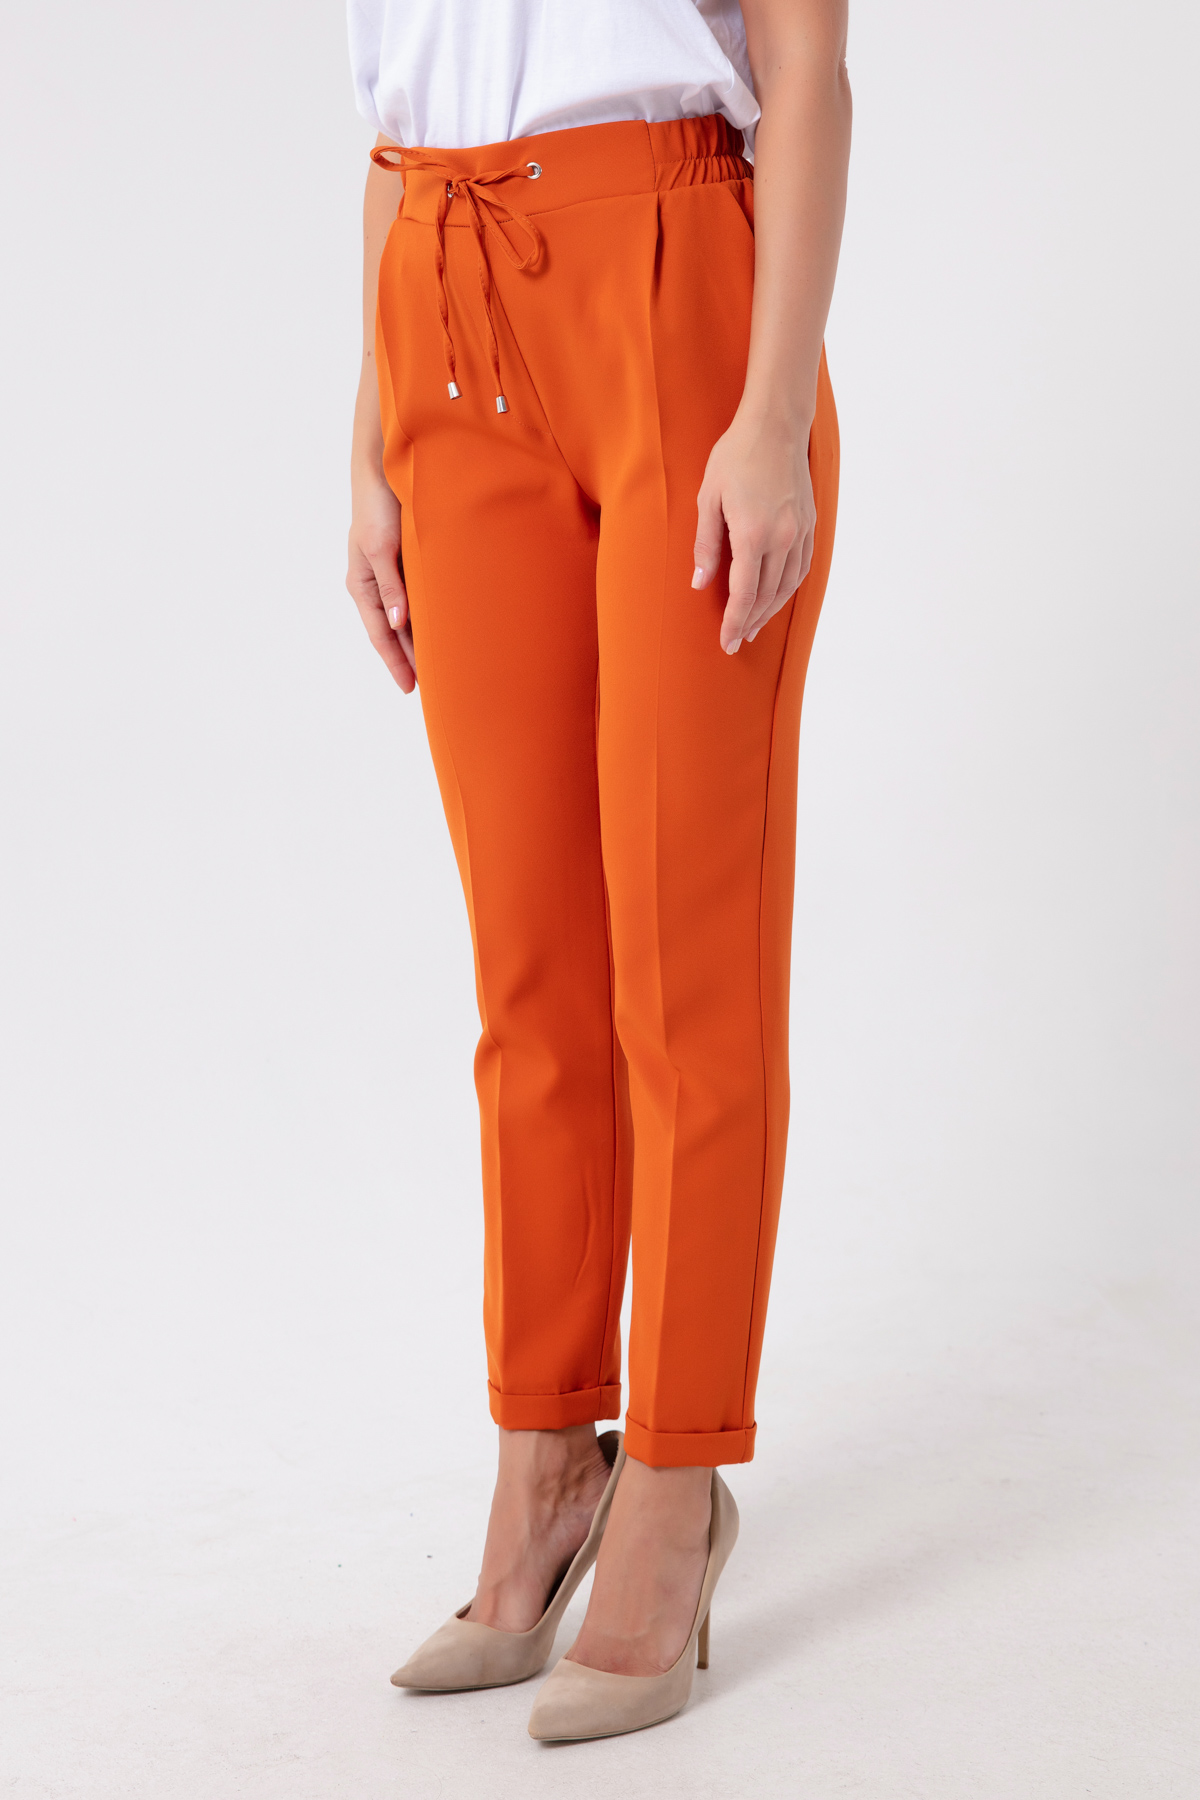 Women's Orange Lace-Up Waist Trousers